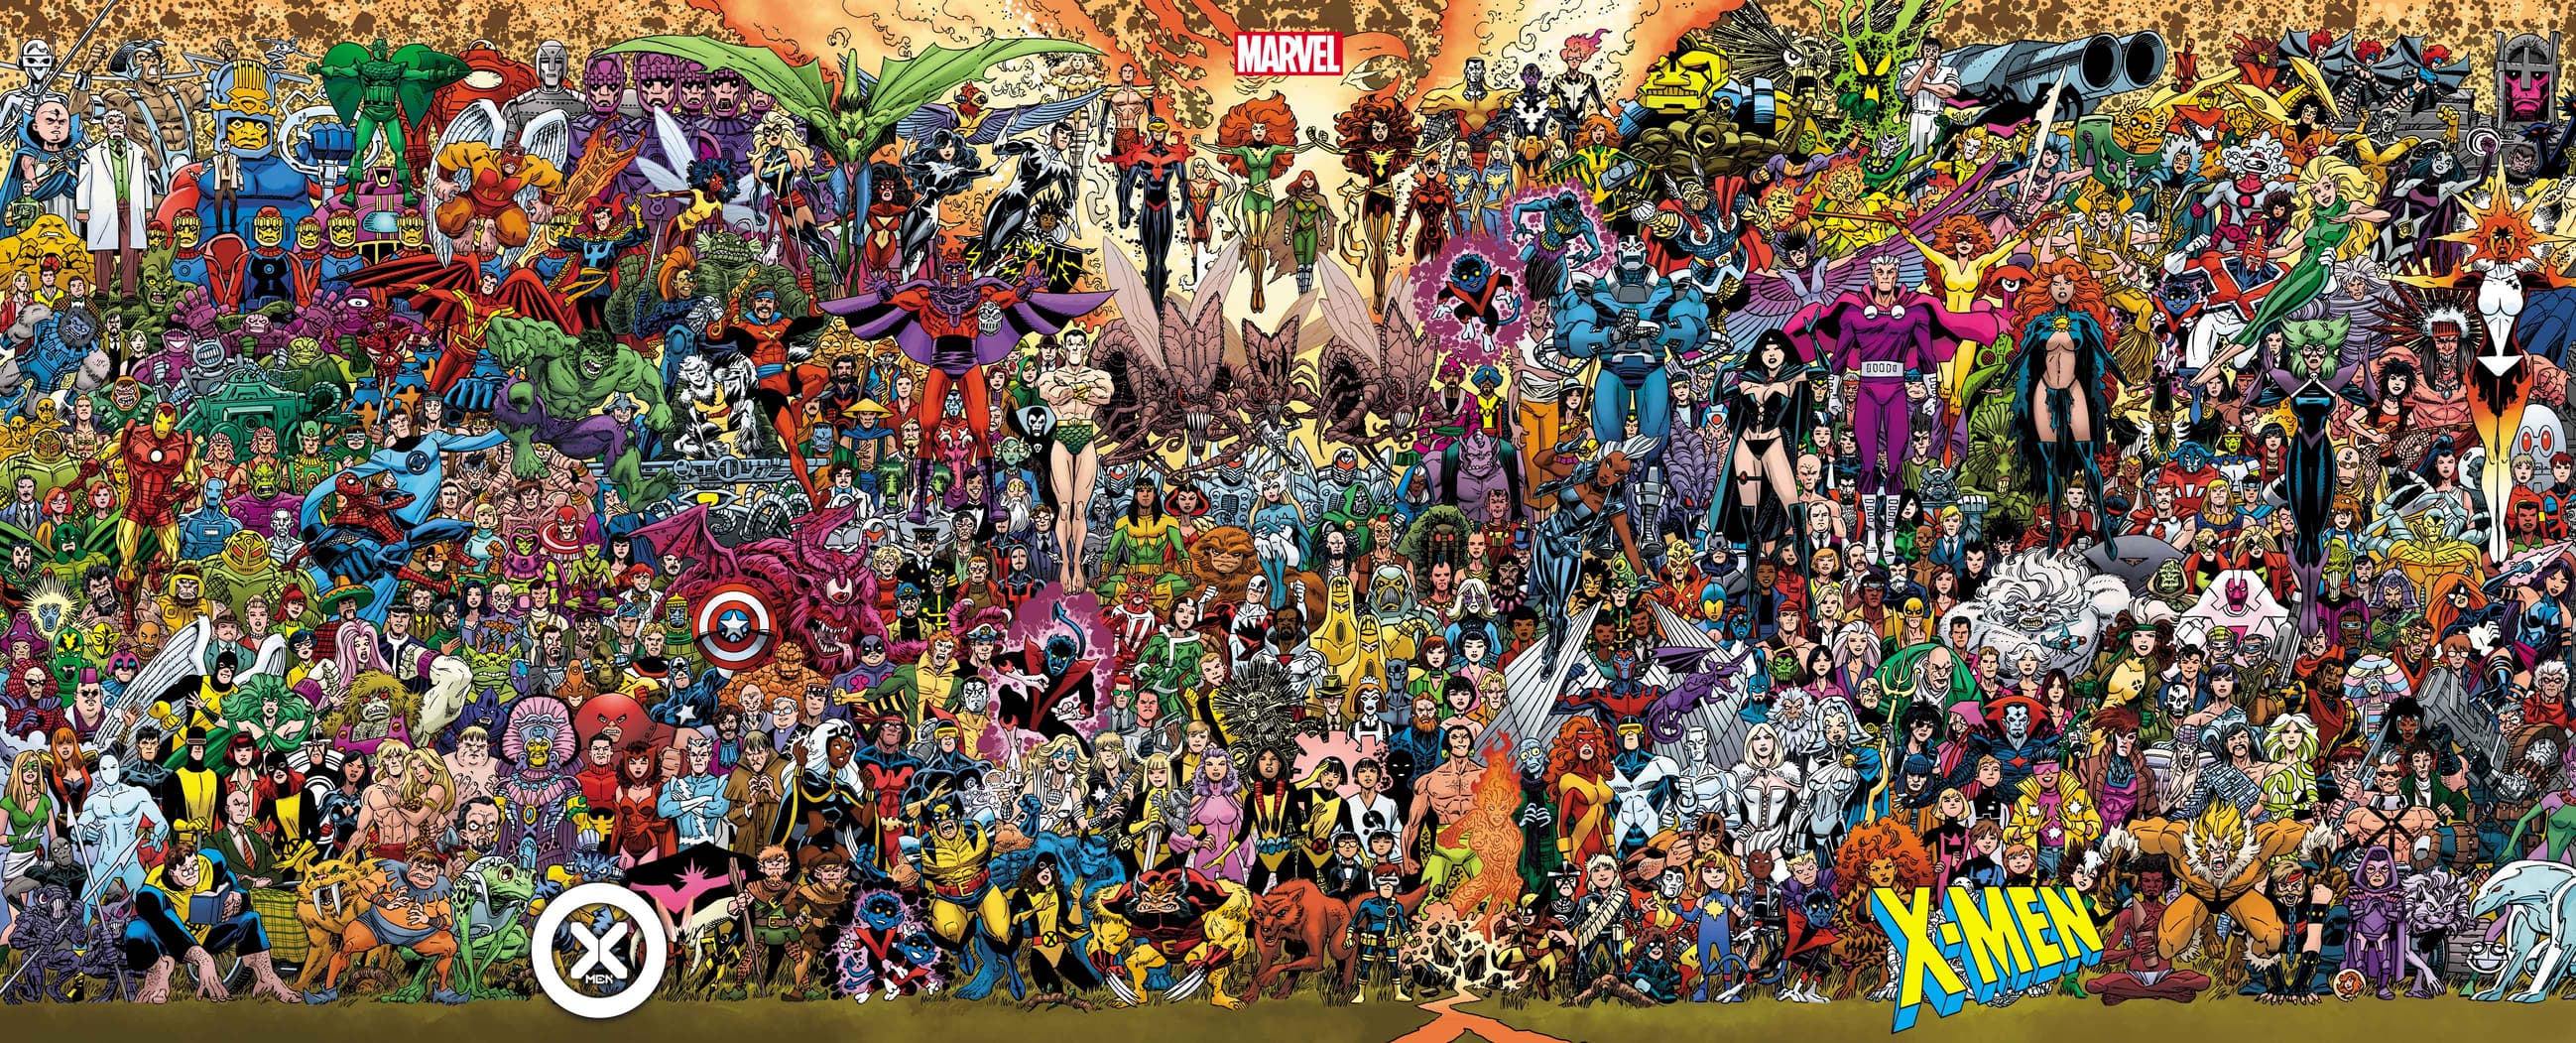 'X-Men' Wraparound Connecting Variant Cover by Scott Koblish